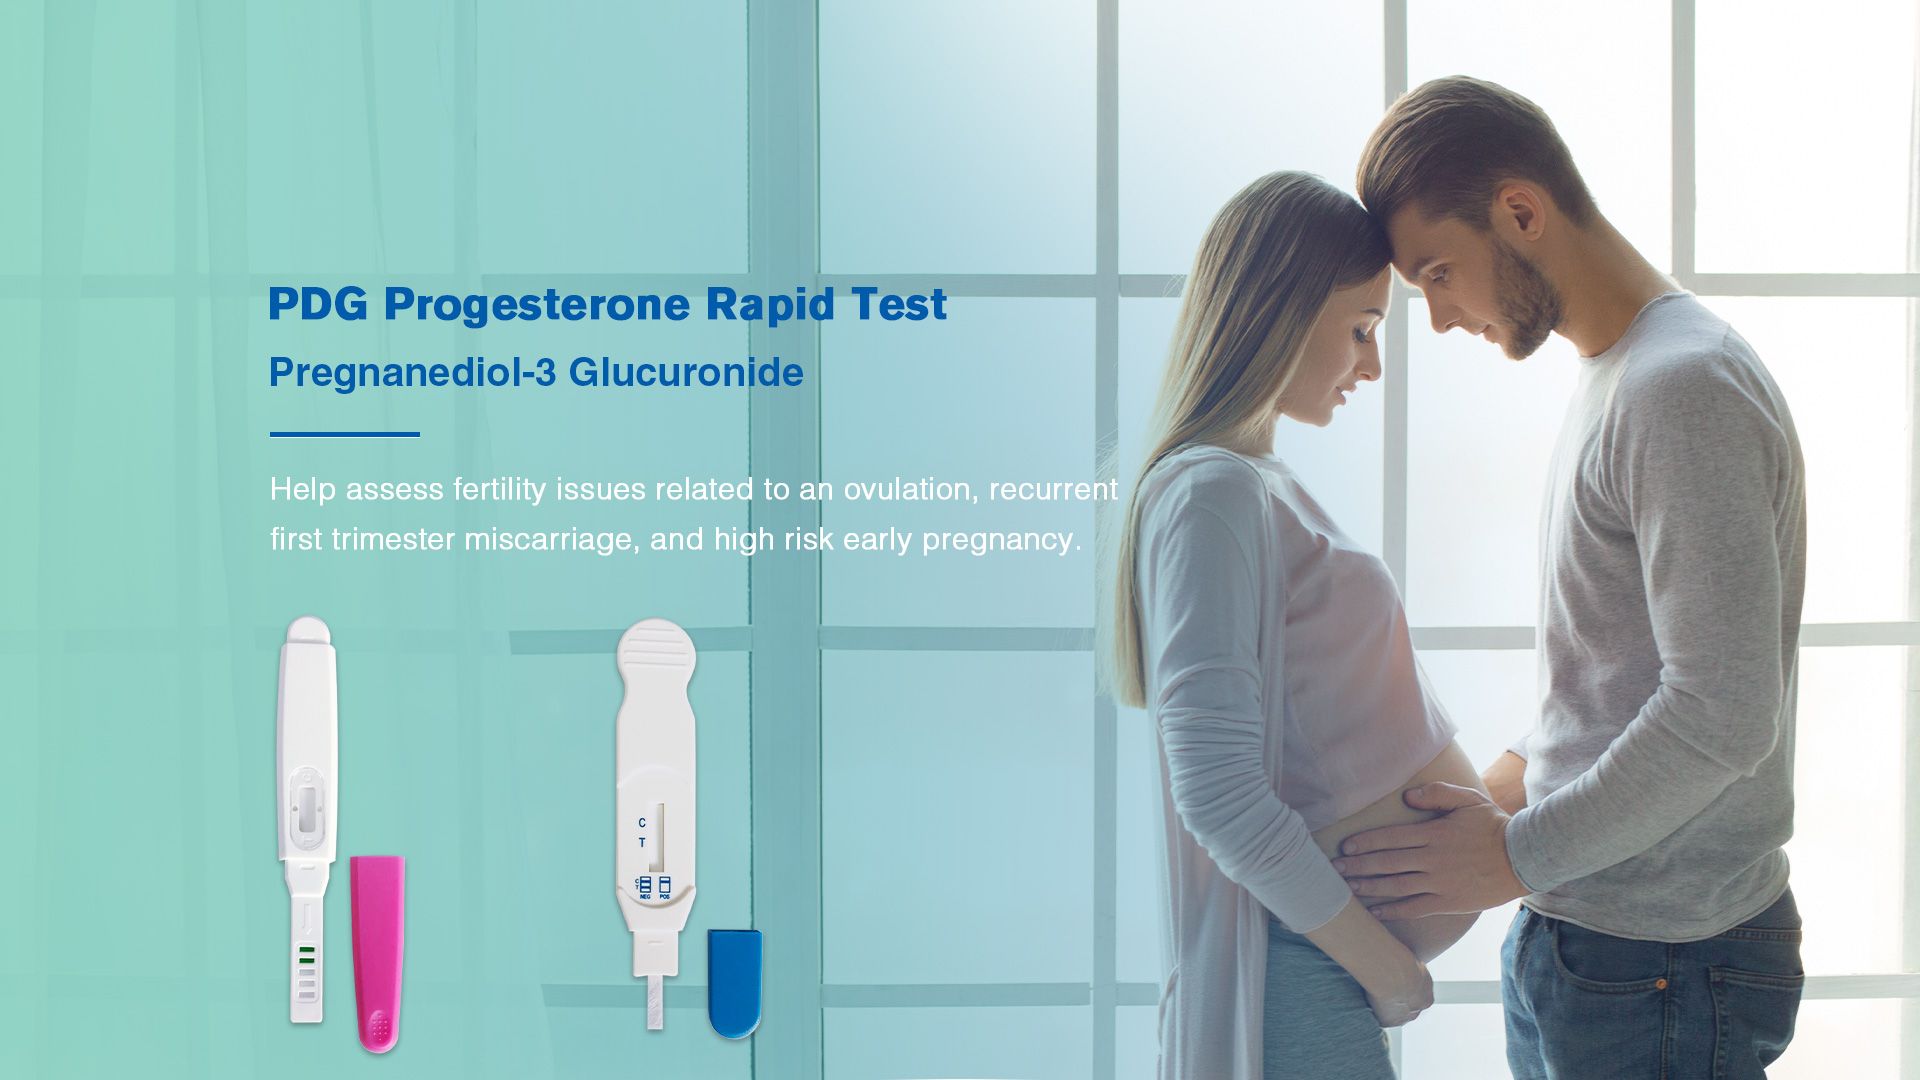 PDG Progestterone Rapid Test